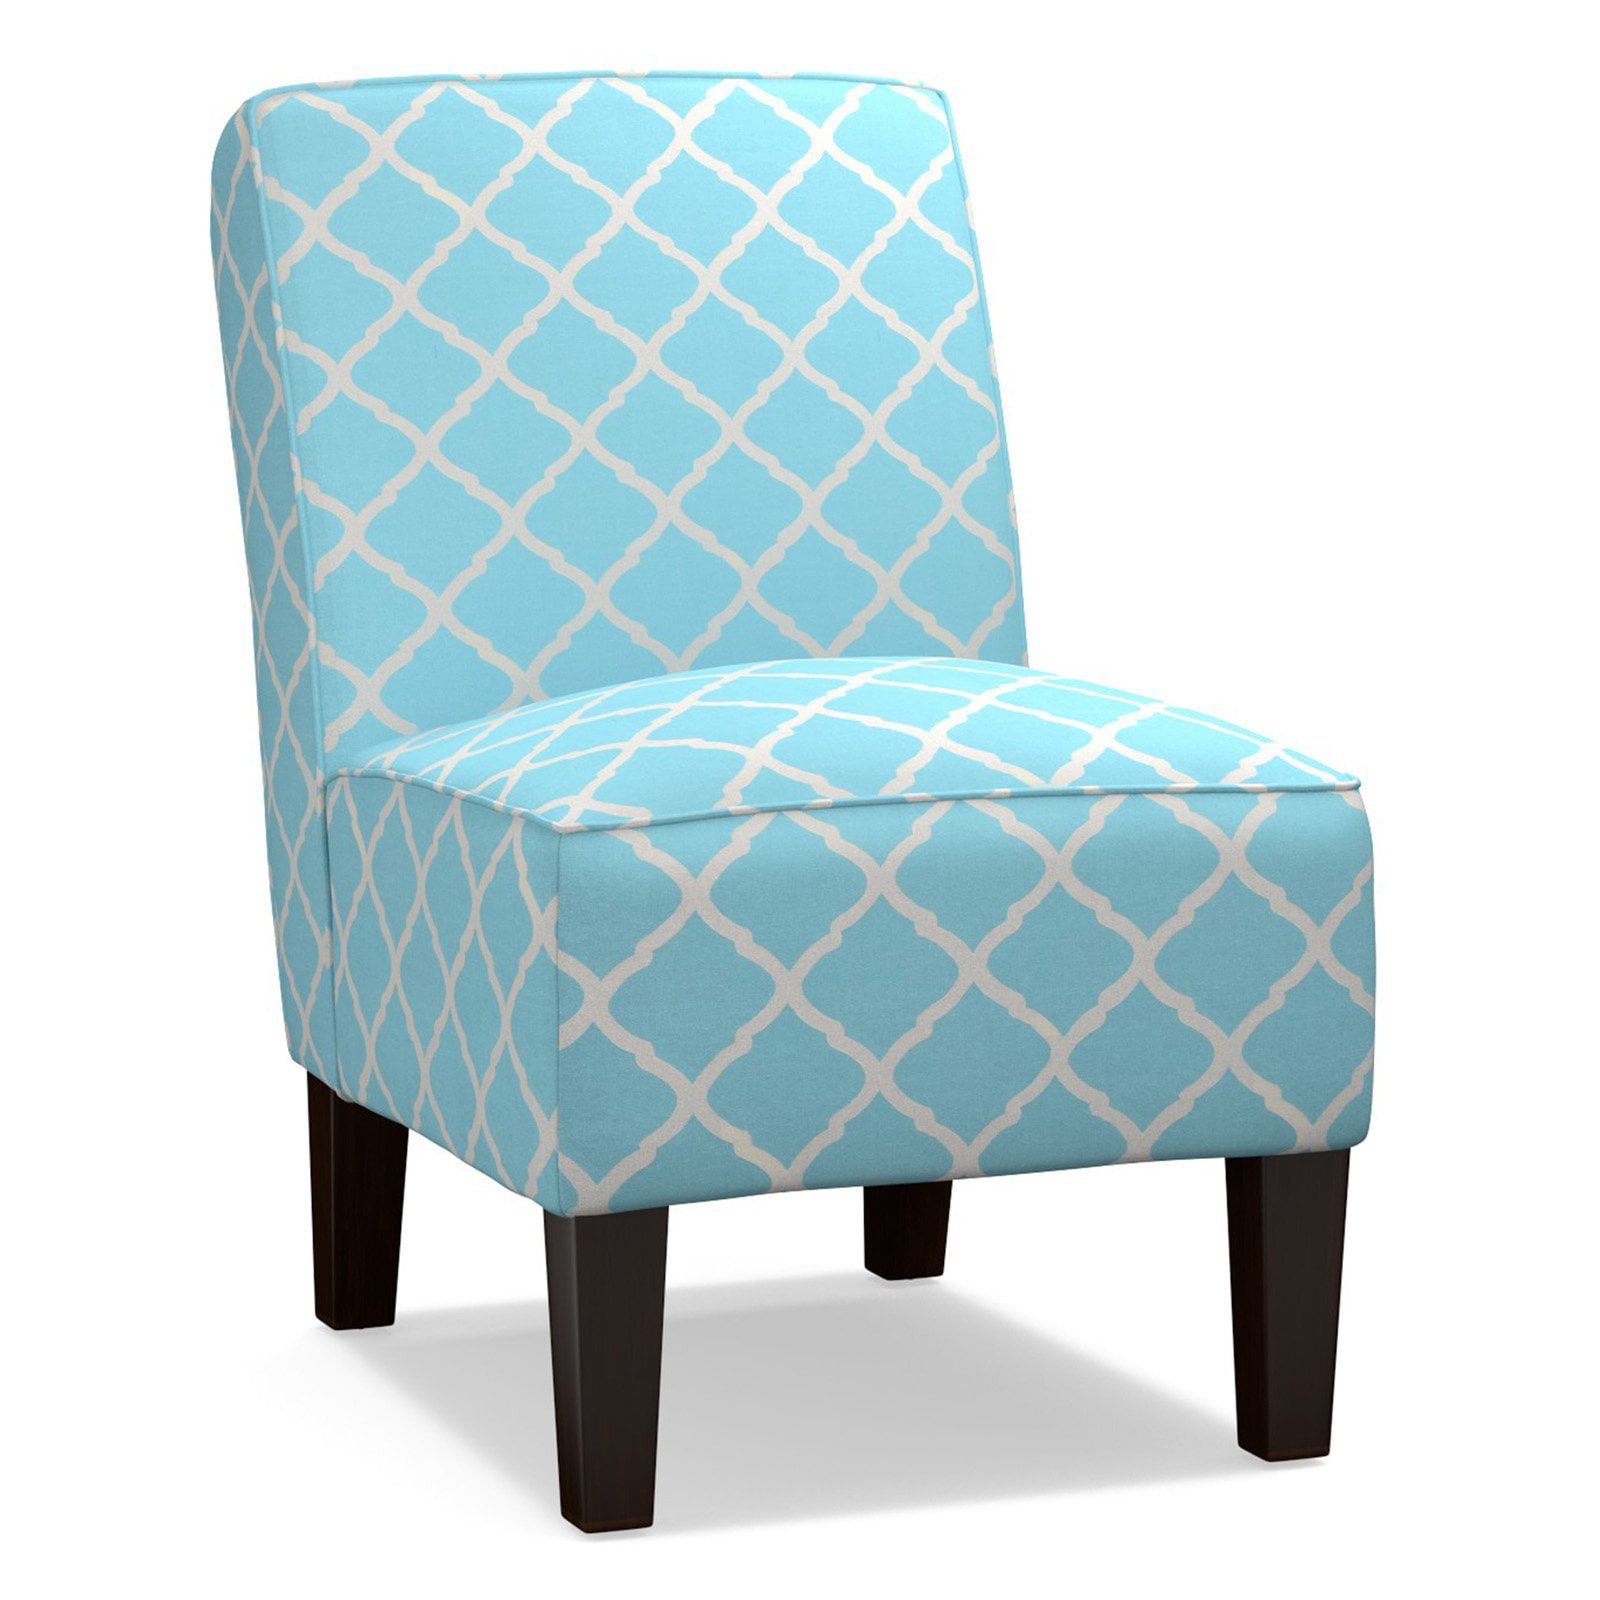 Accent Chairs Under 100 00 | Chair Design